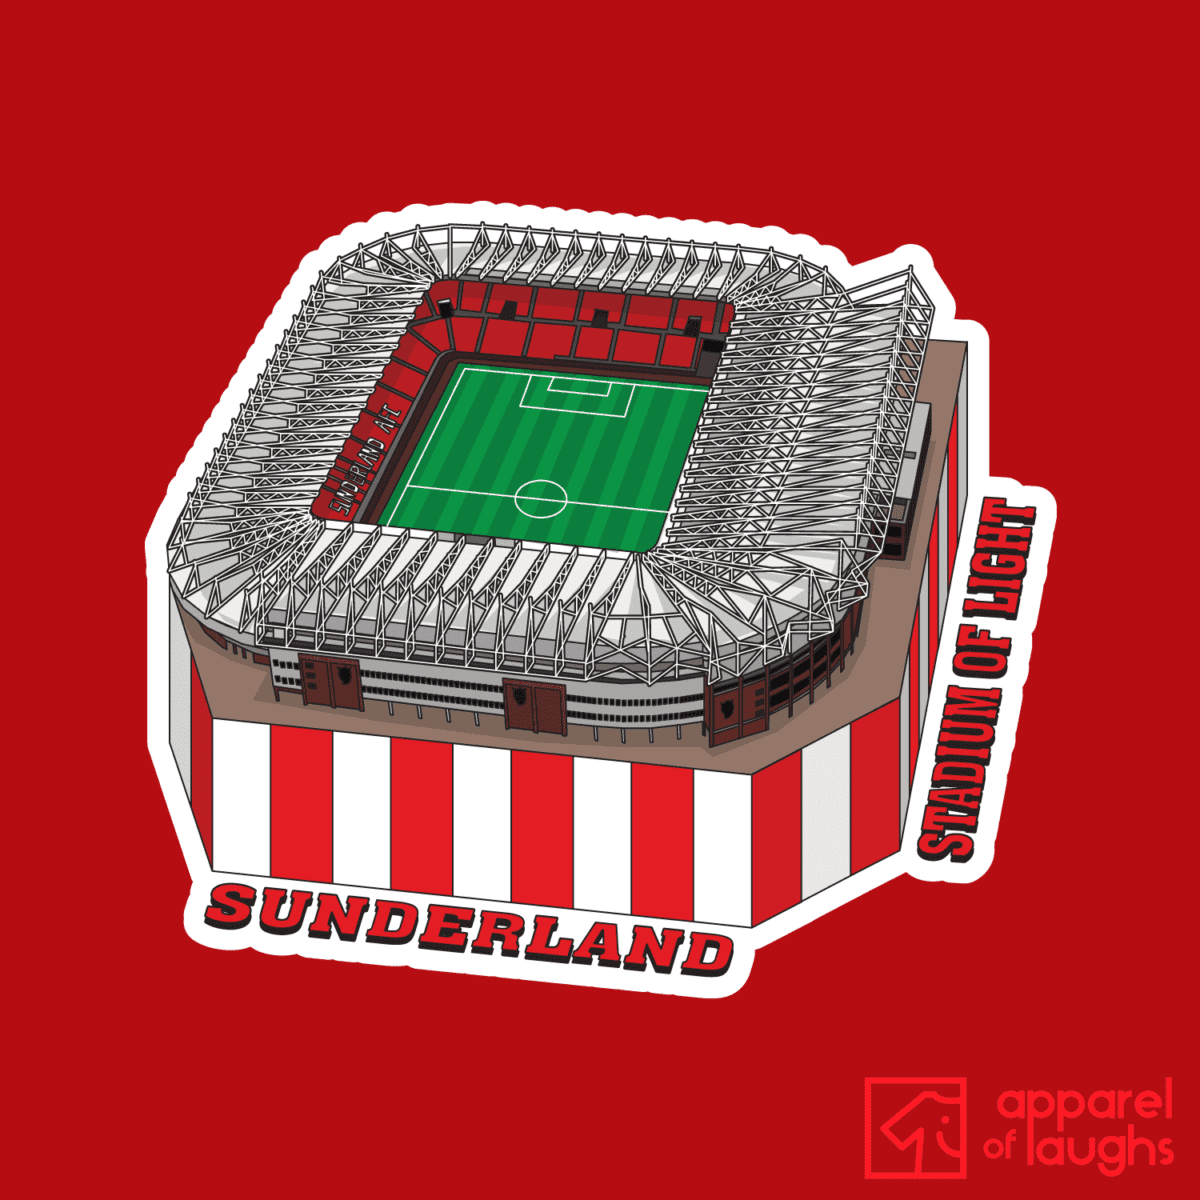 Sunderland Stadium of Light Football Illustration T-Shirt Design Red